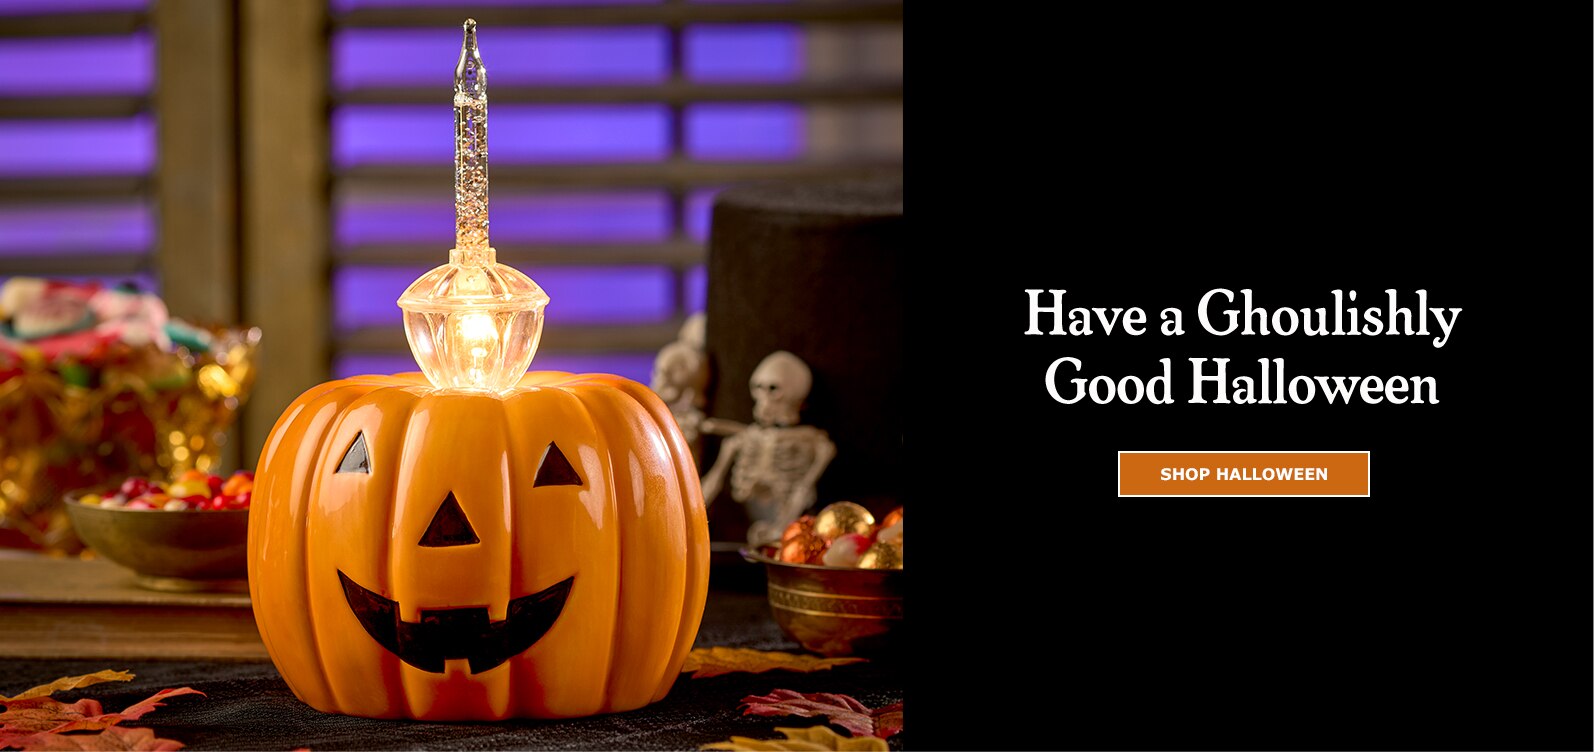 Have a Ghoulishly Good Halloween. Shop Halloween